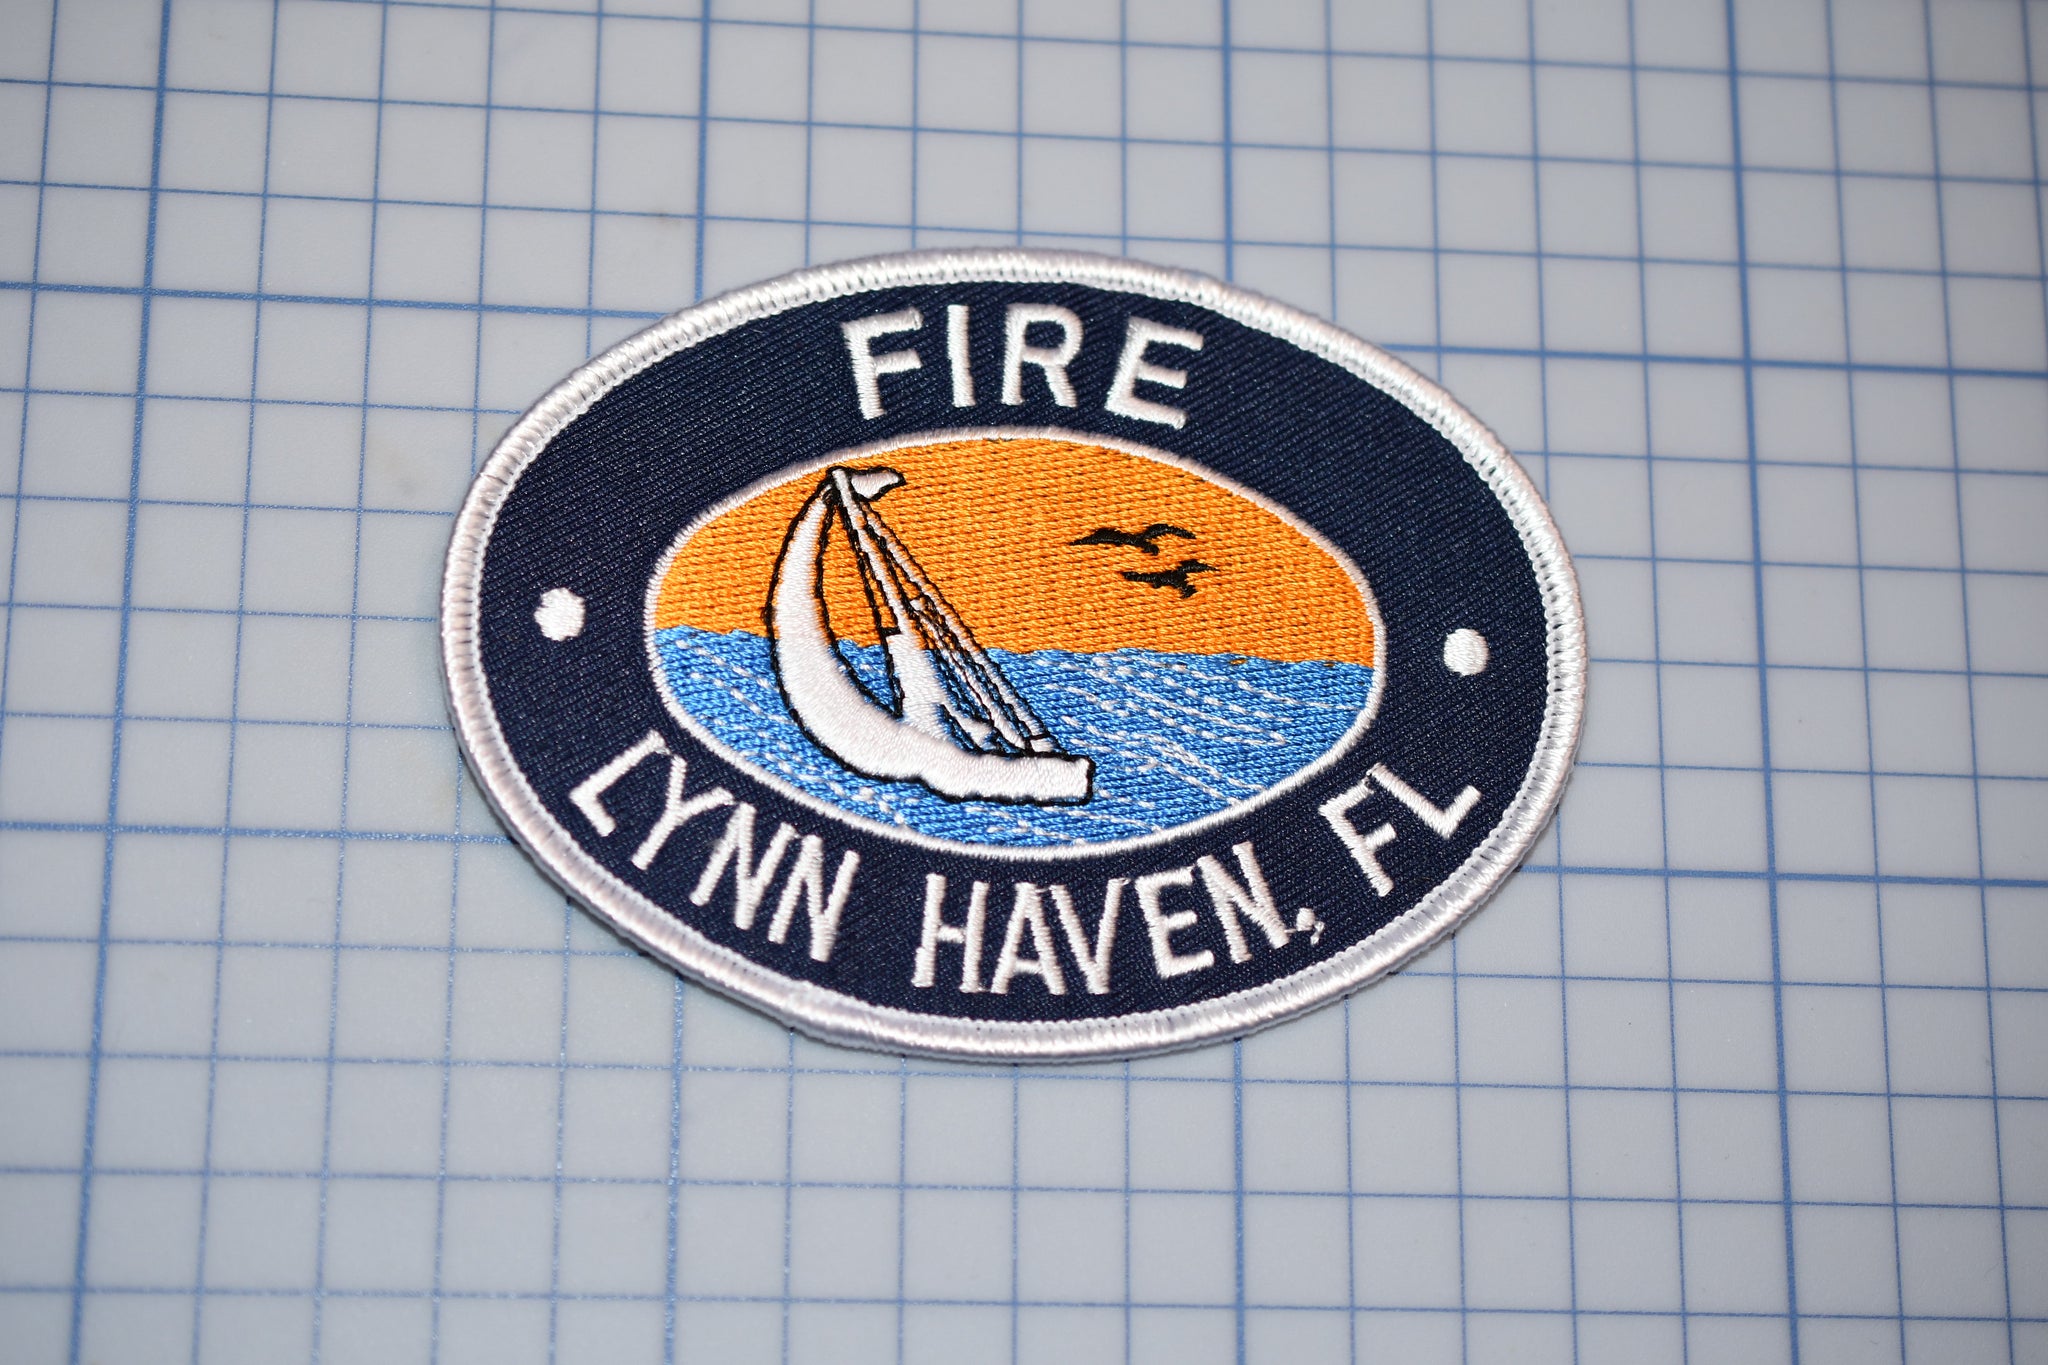 Lynn Haven Florida Fire Department Patch (B29-356)